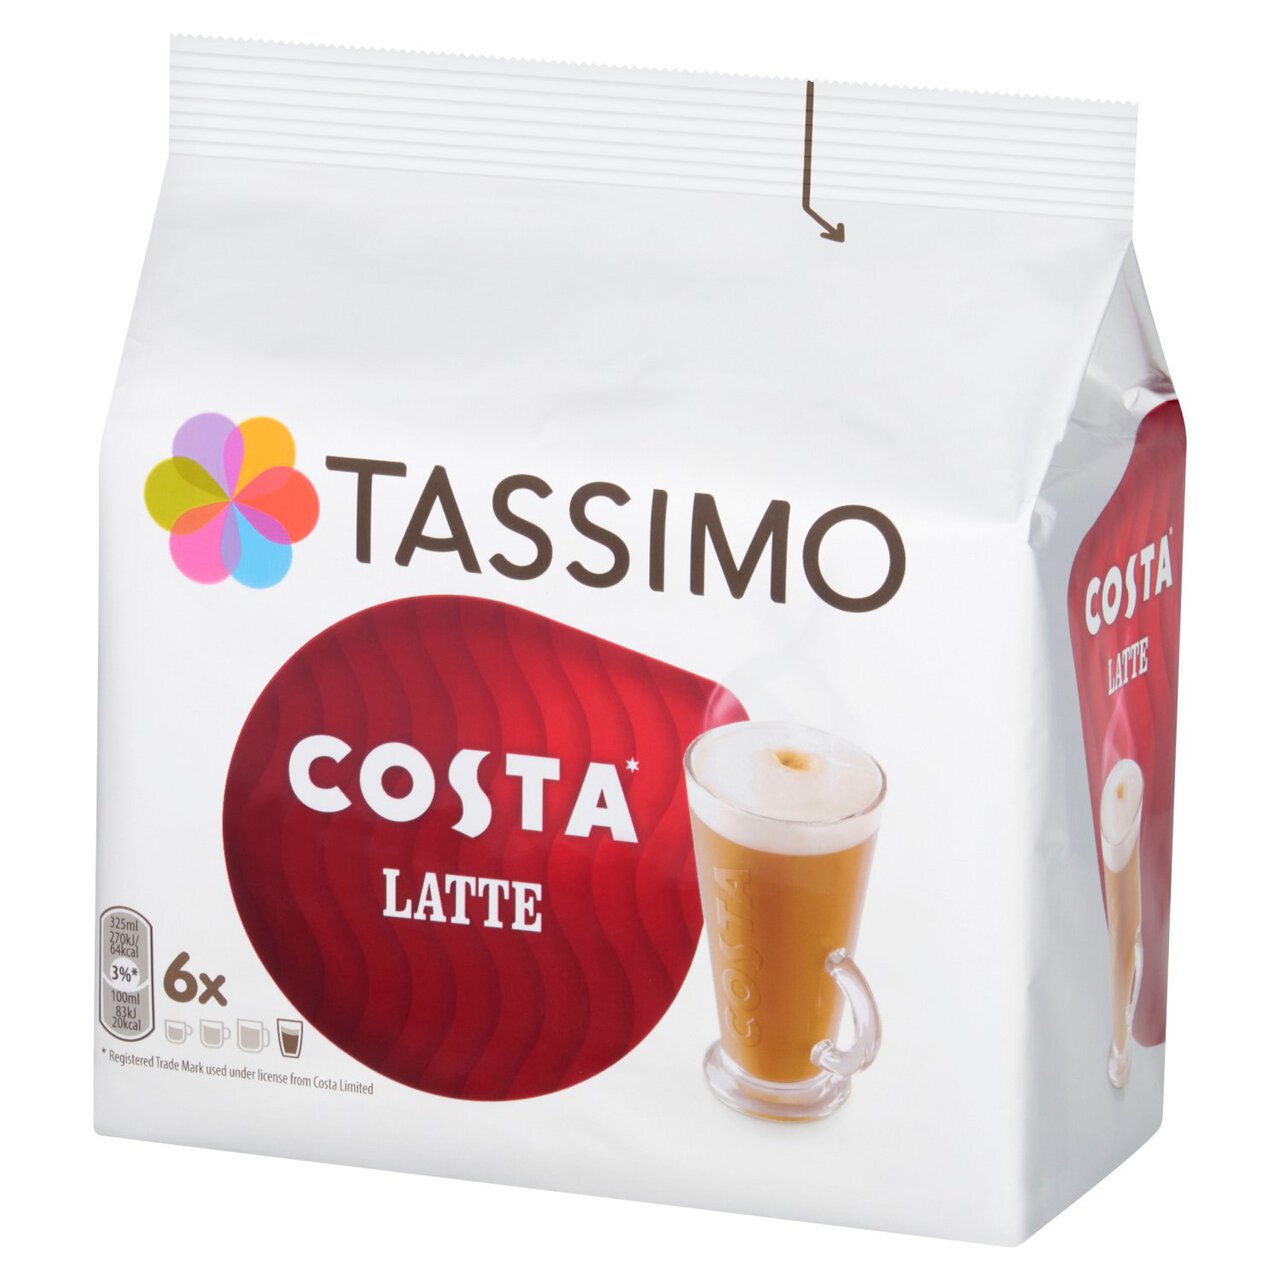 Tassimo Costa Latte Coffee Pods 6 per pack